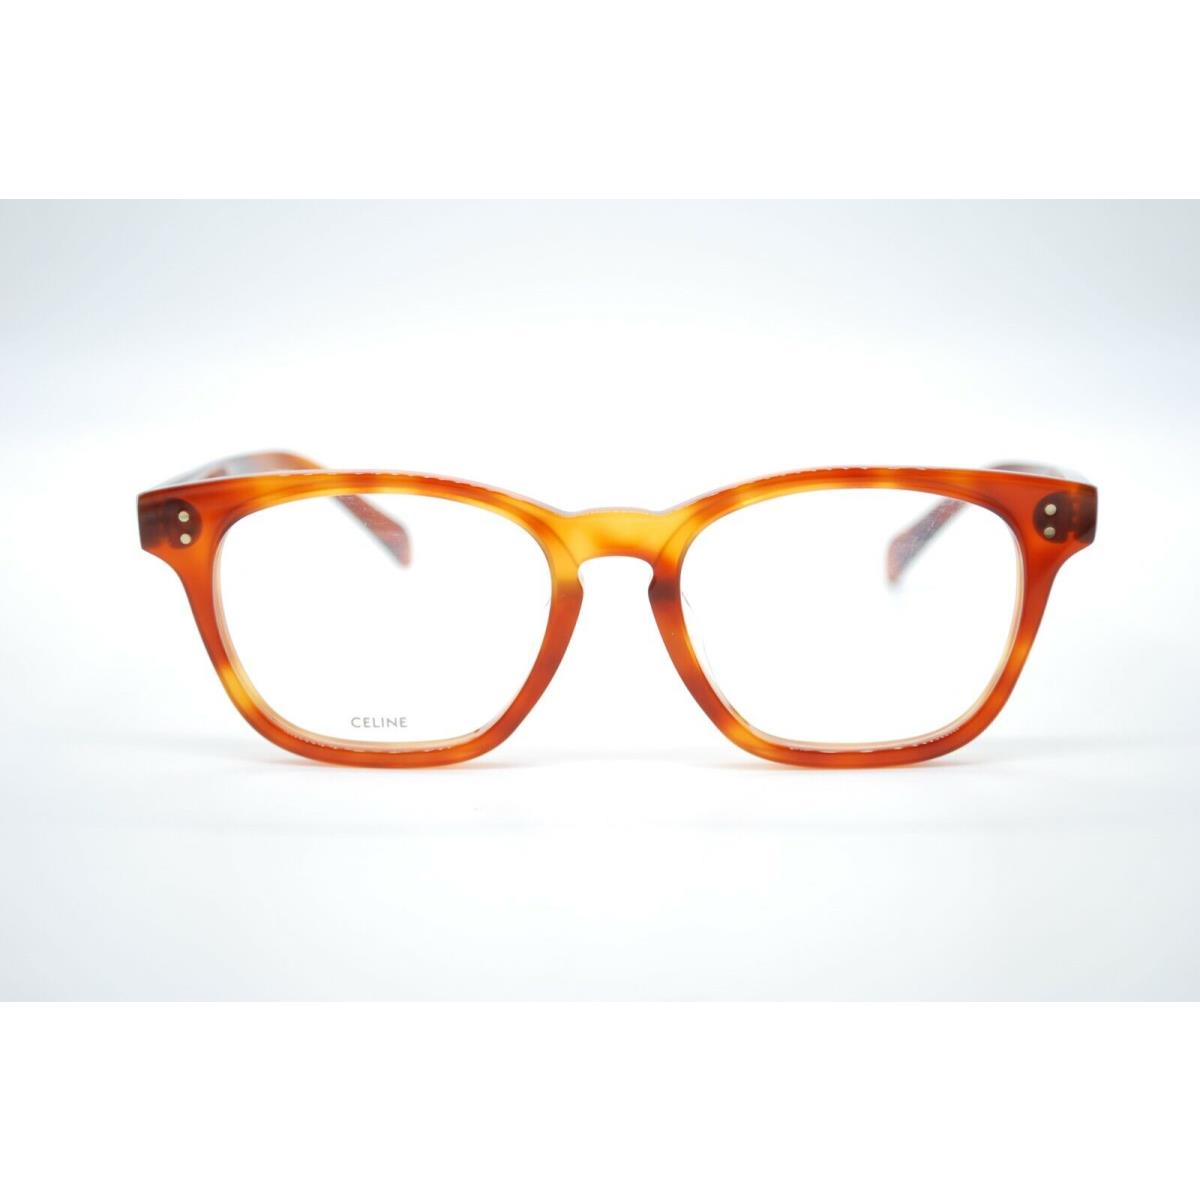 Celine eyeglasses  - Brown Frame 1